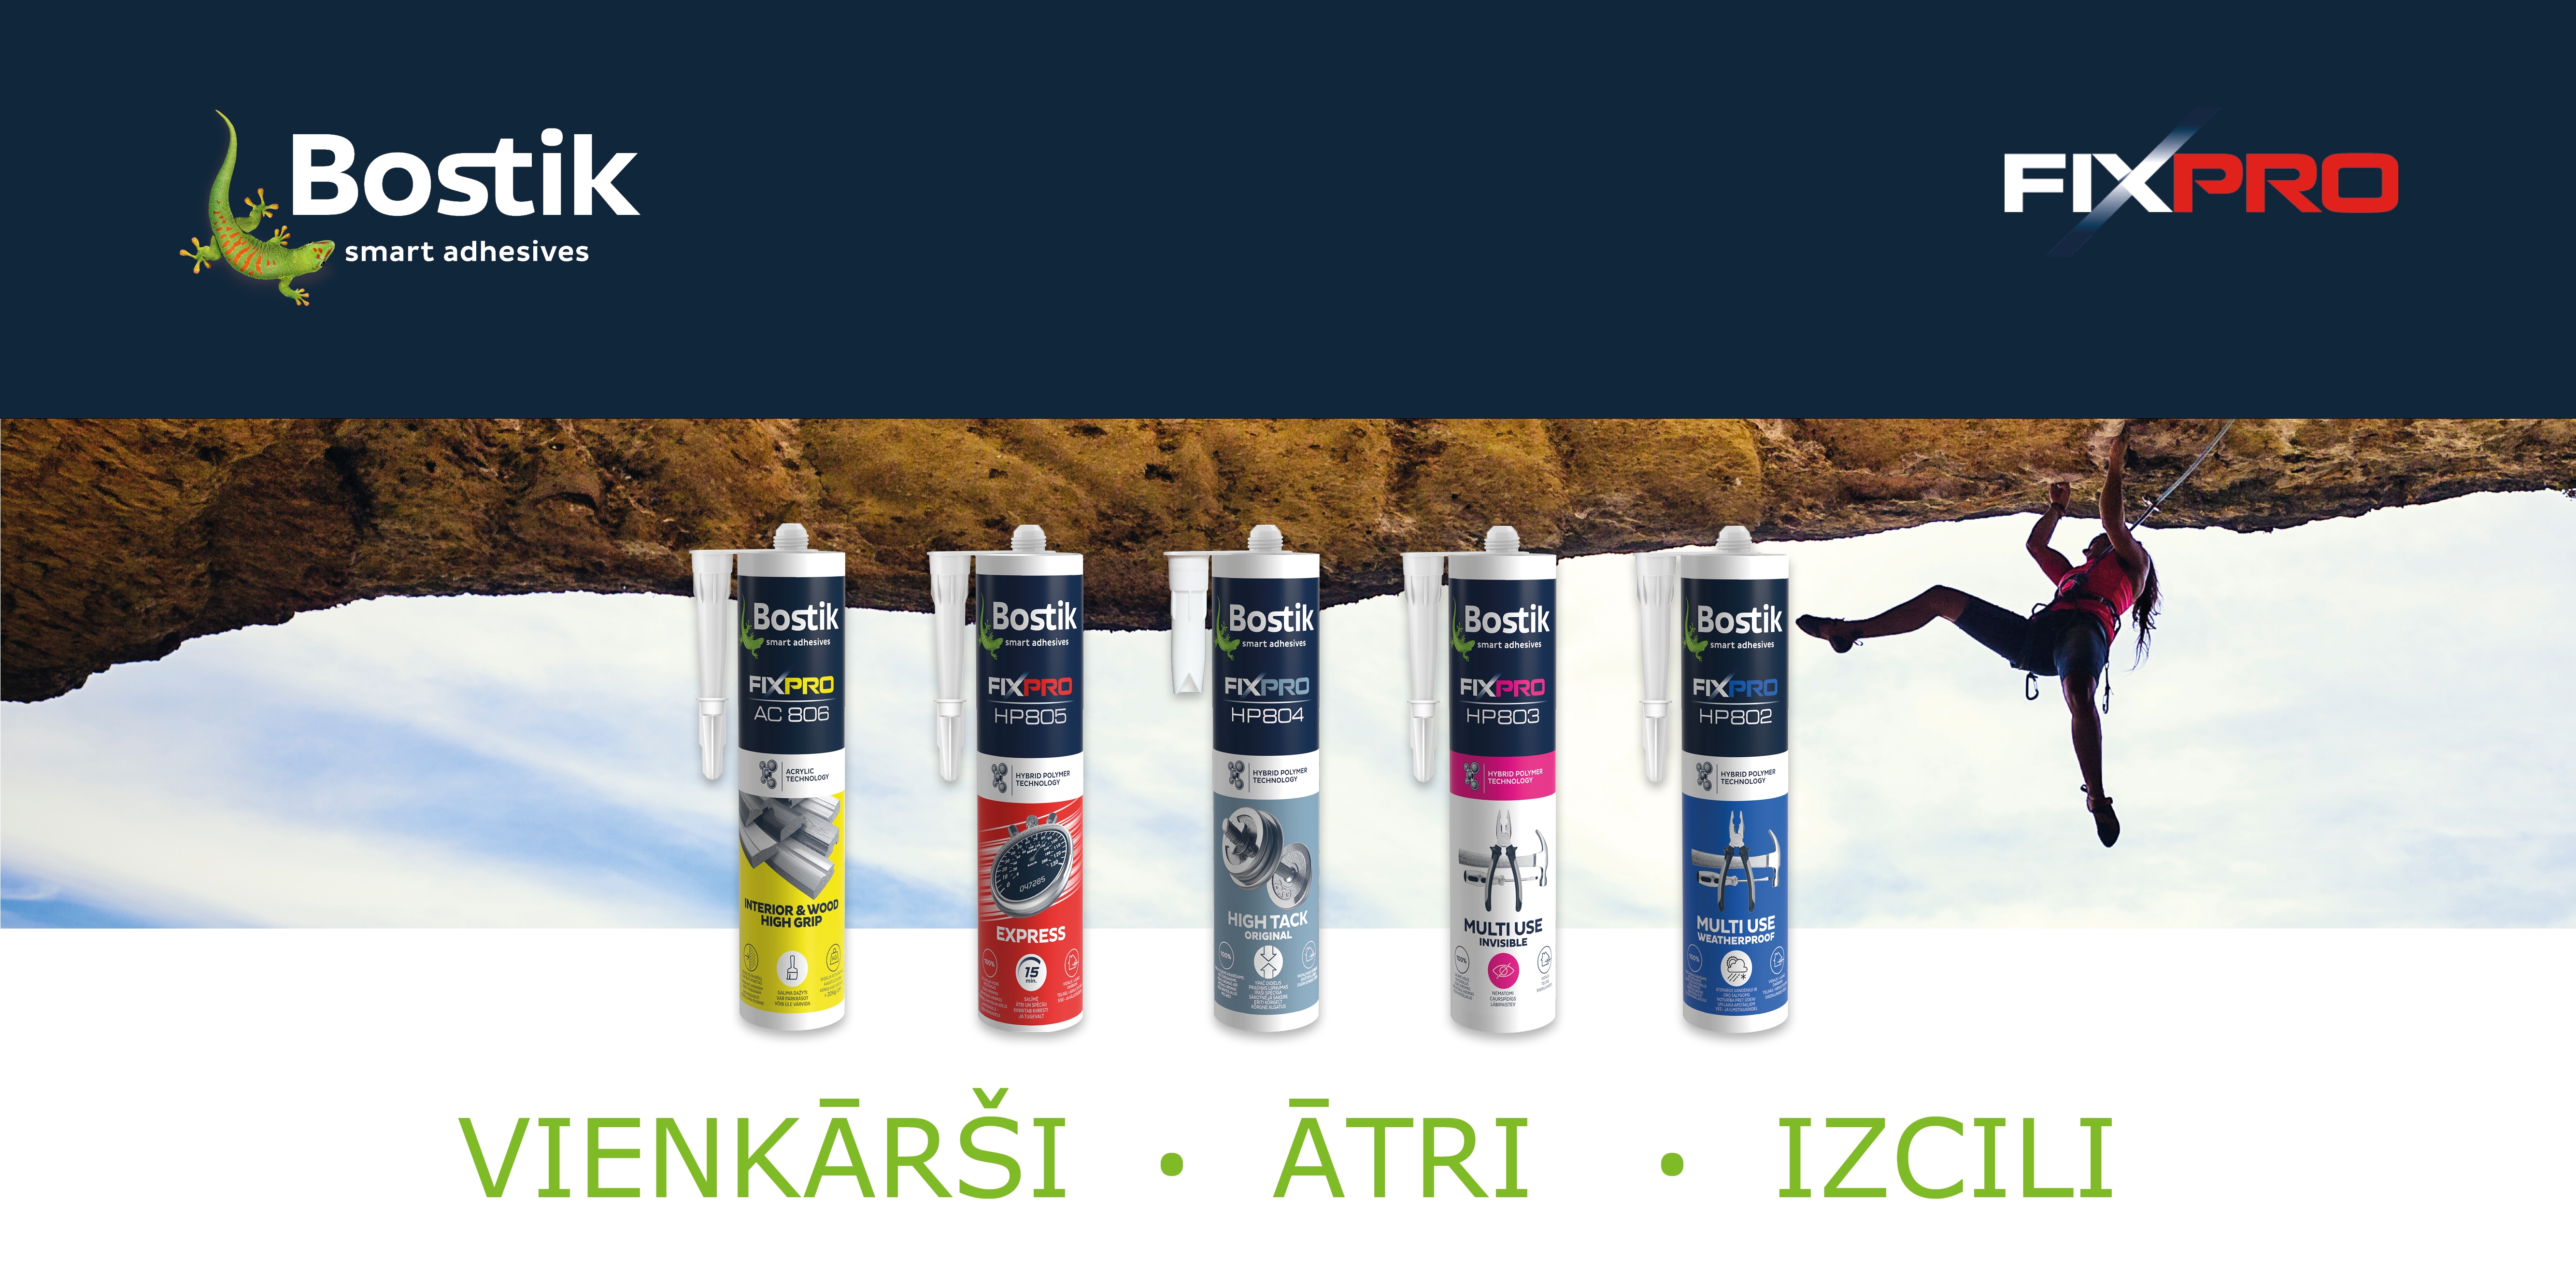 Bostik-DIY-Latvia-Fix-Pro-banner-1280x640